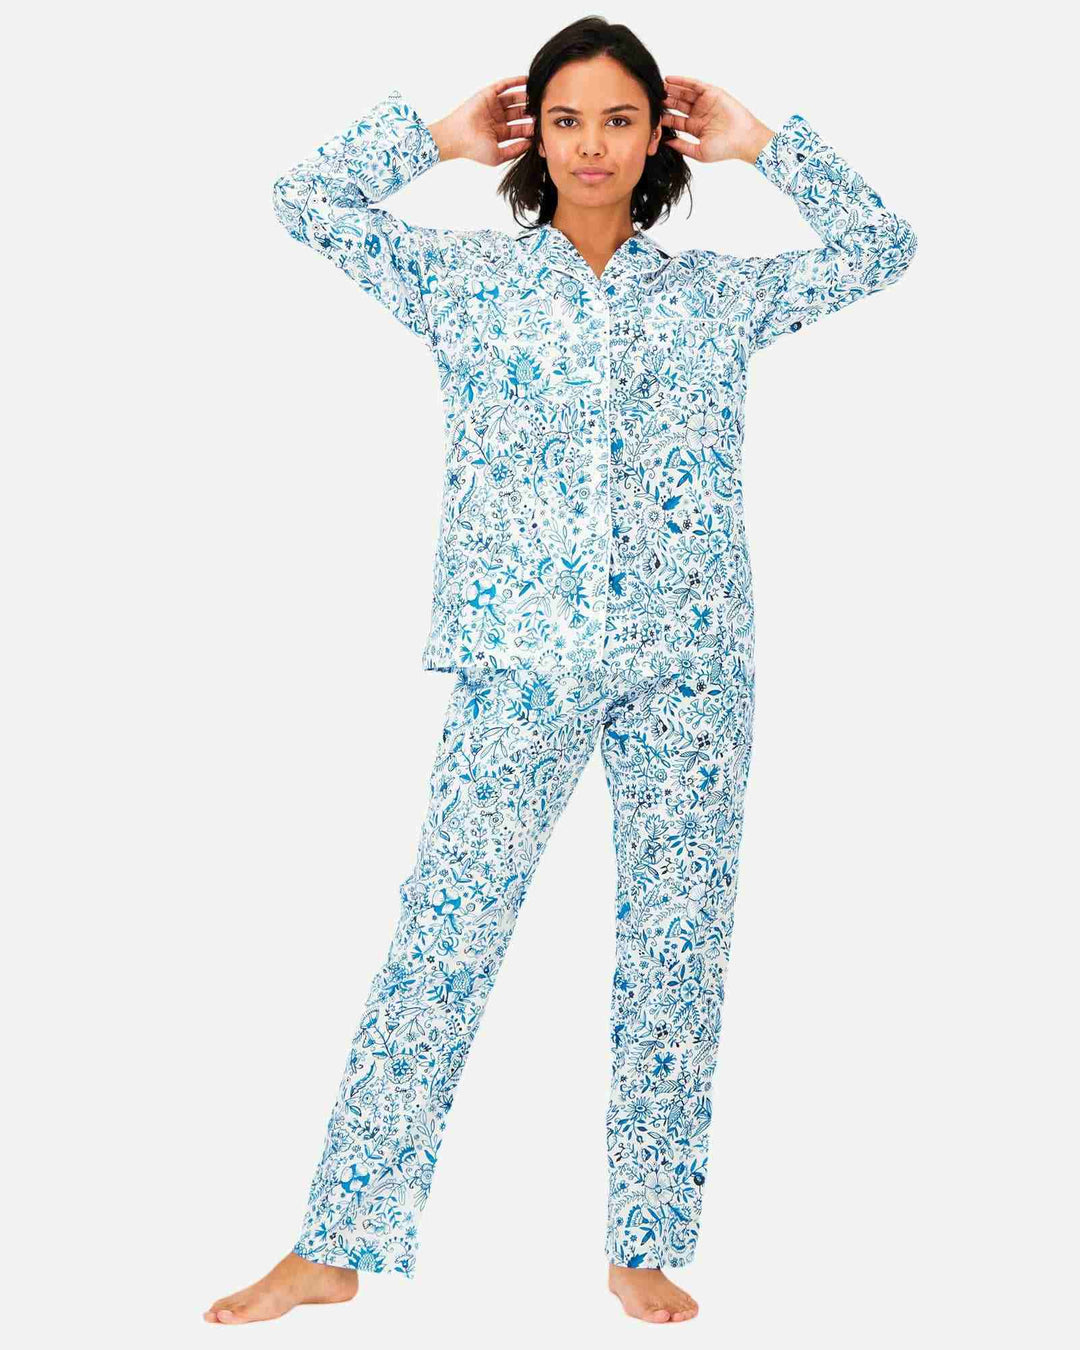 Womens cotton pyjamas set - white blue Chandler pattern